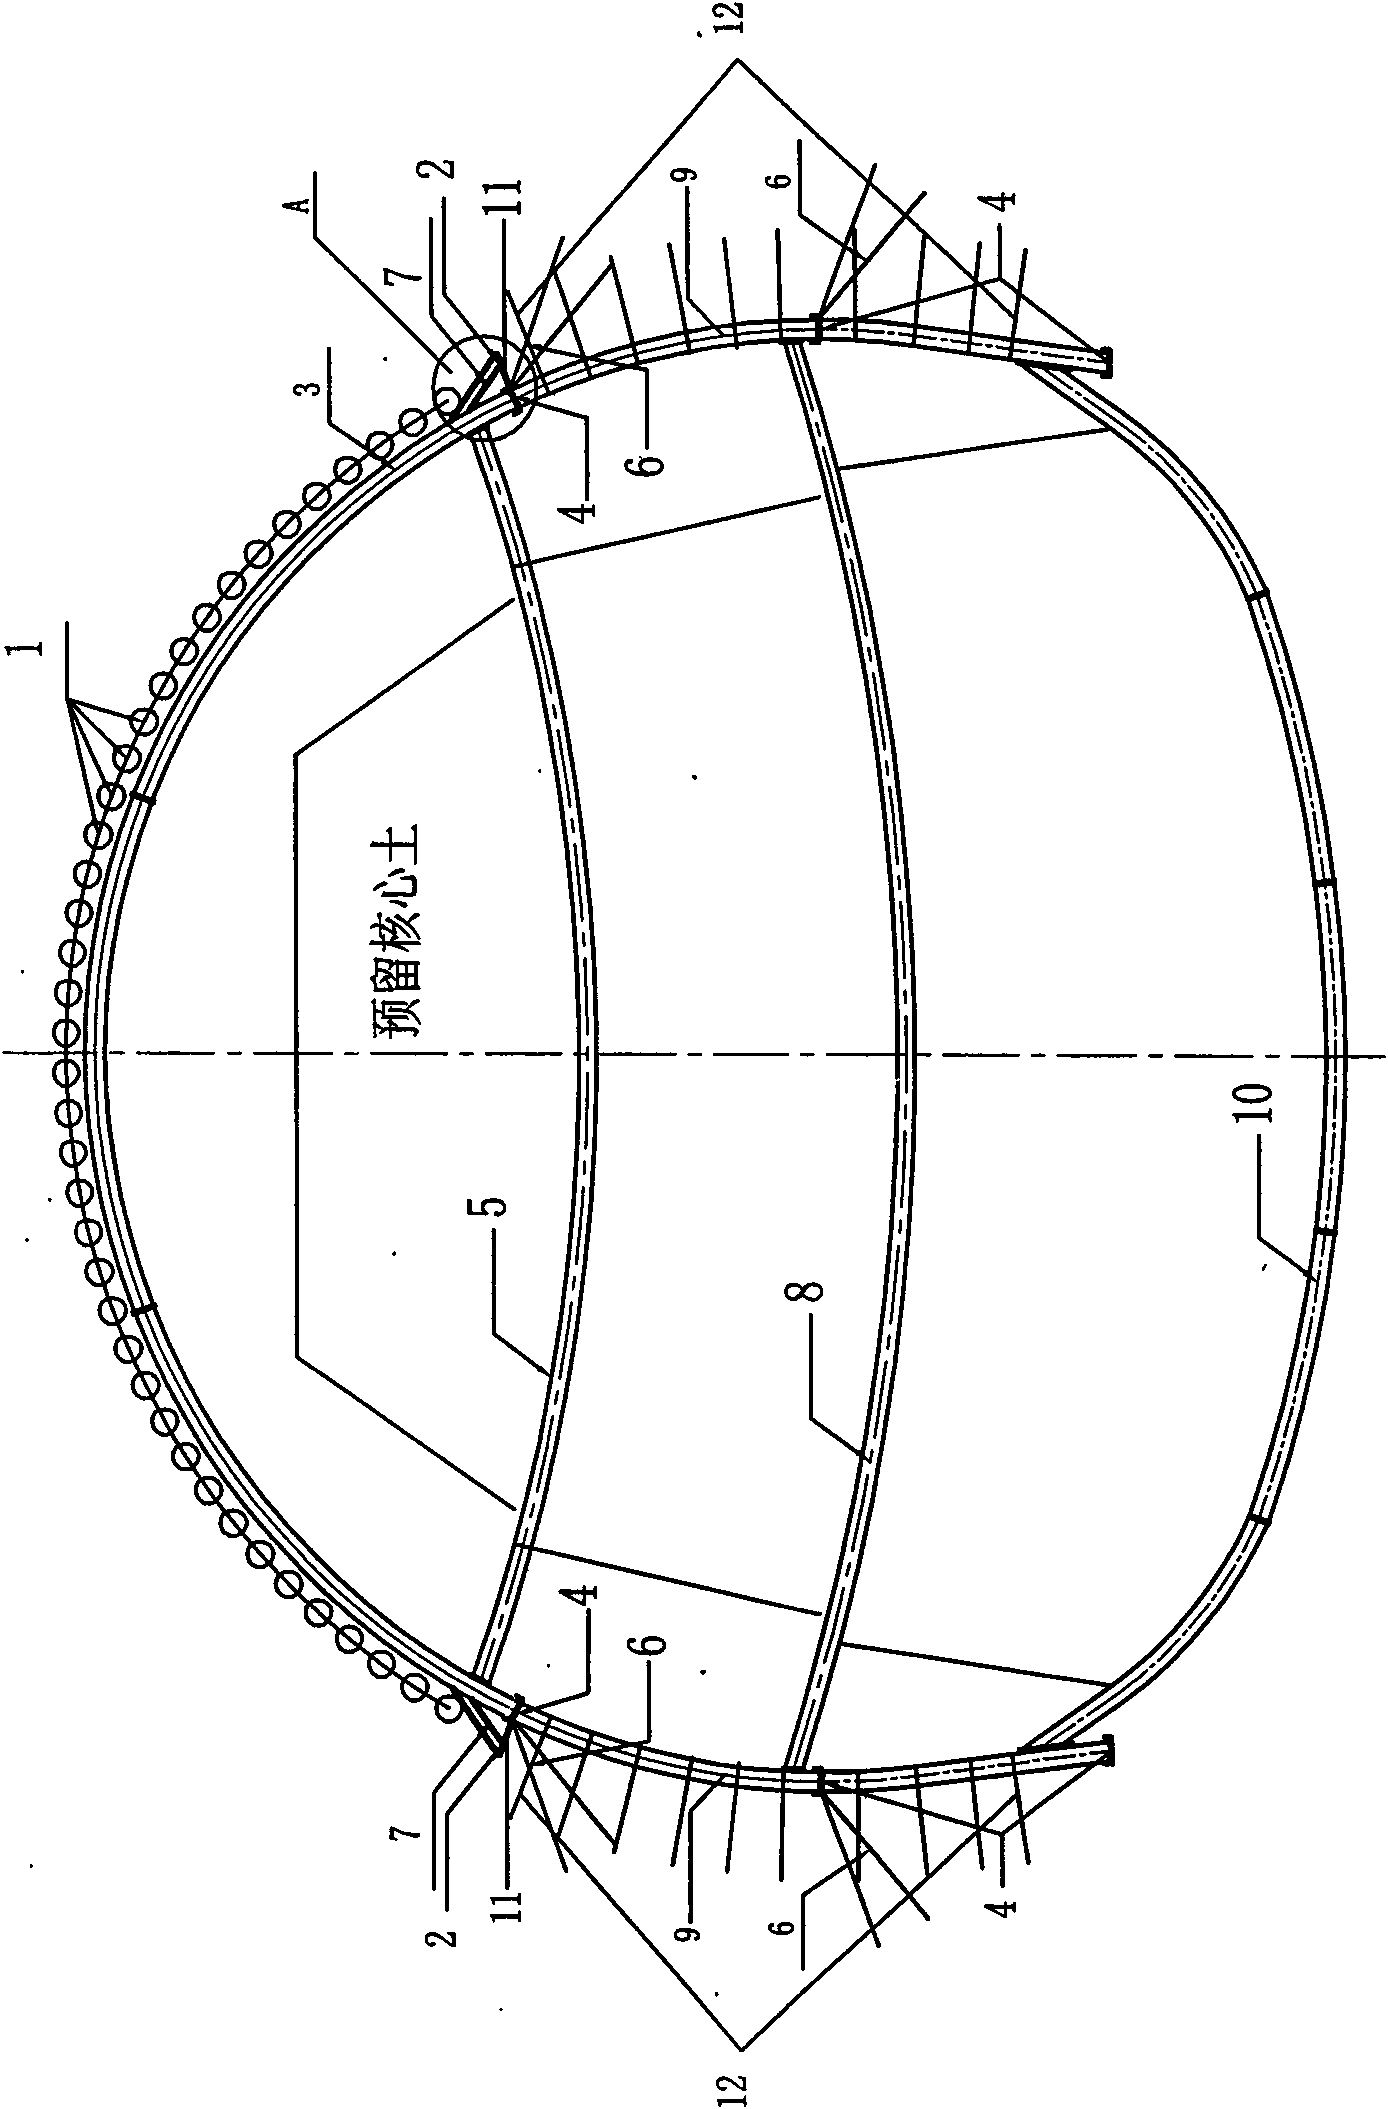 Construction method of V-level surrounding rock tunnel